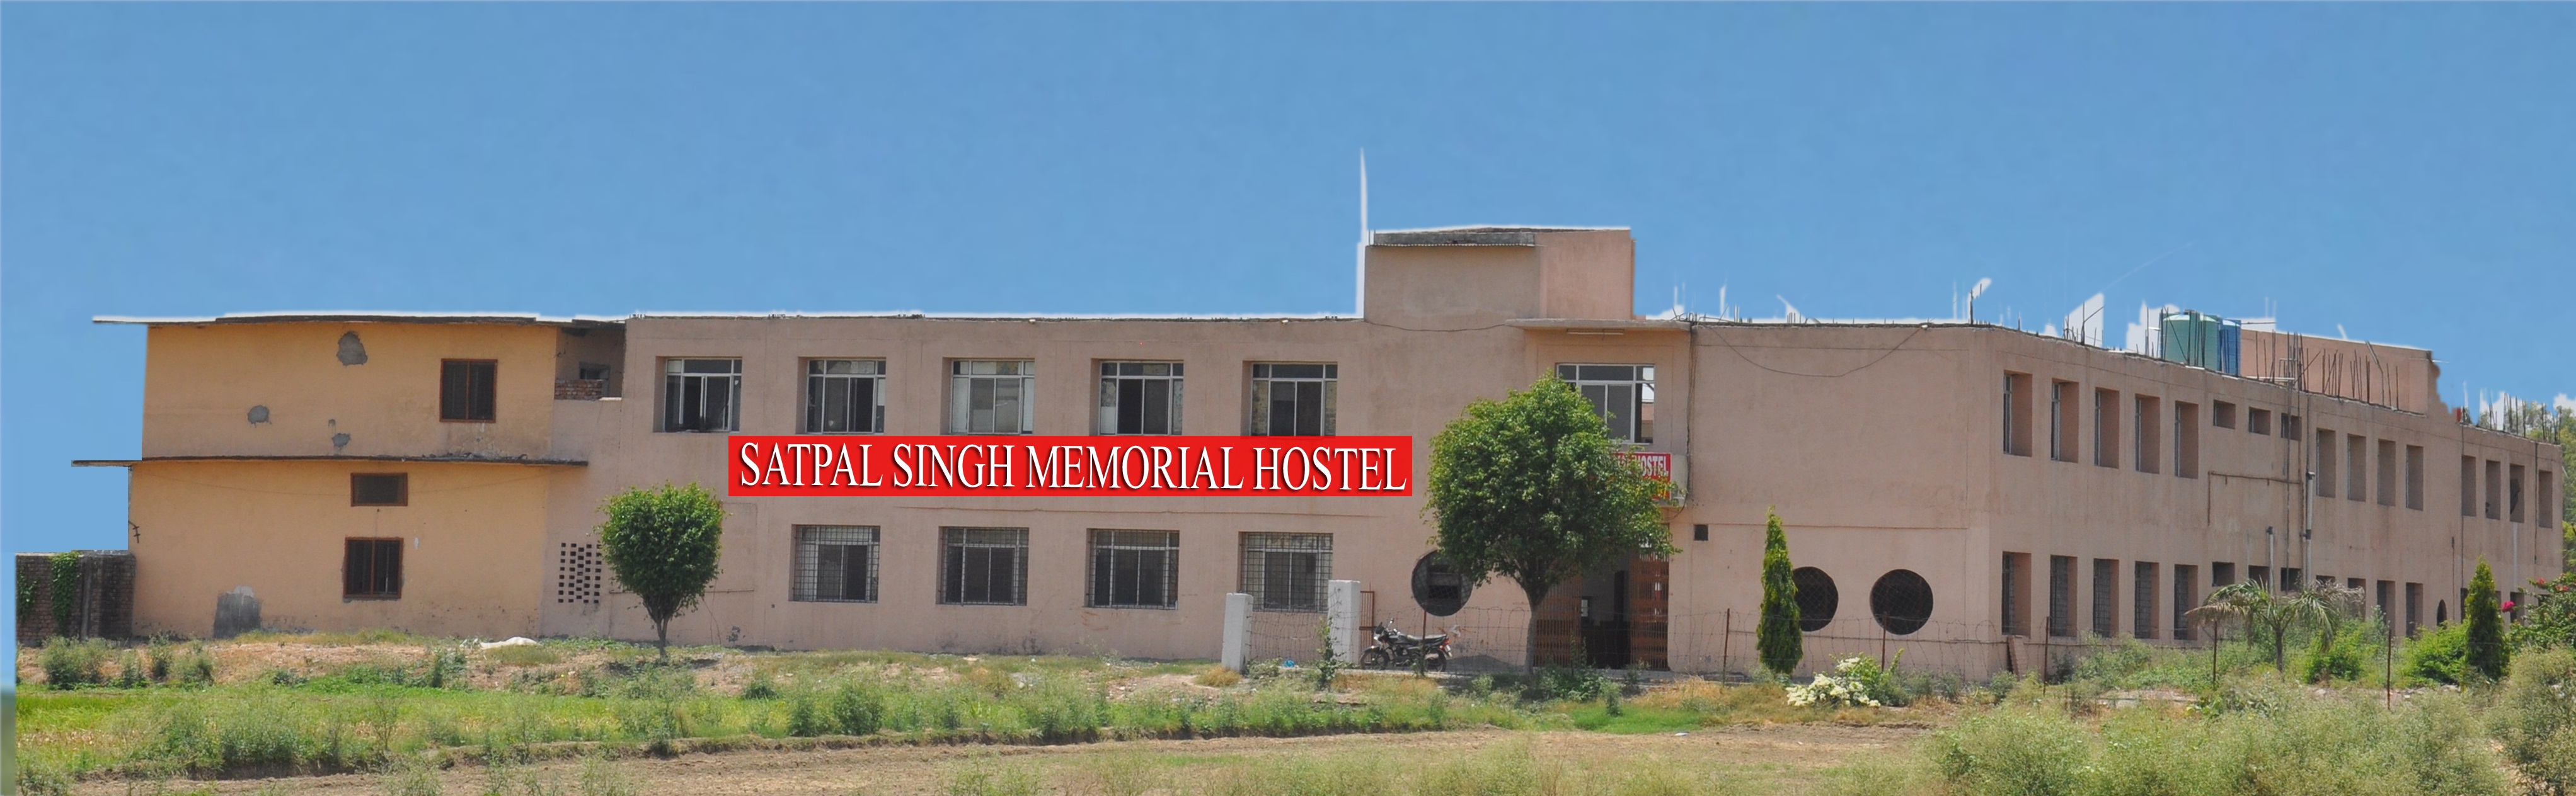 Satpal Singh Memorial Hostel